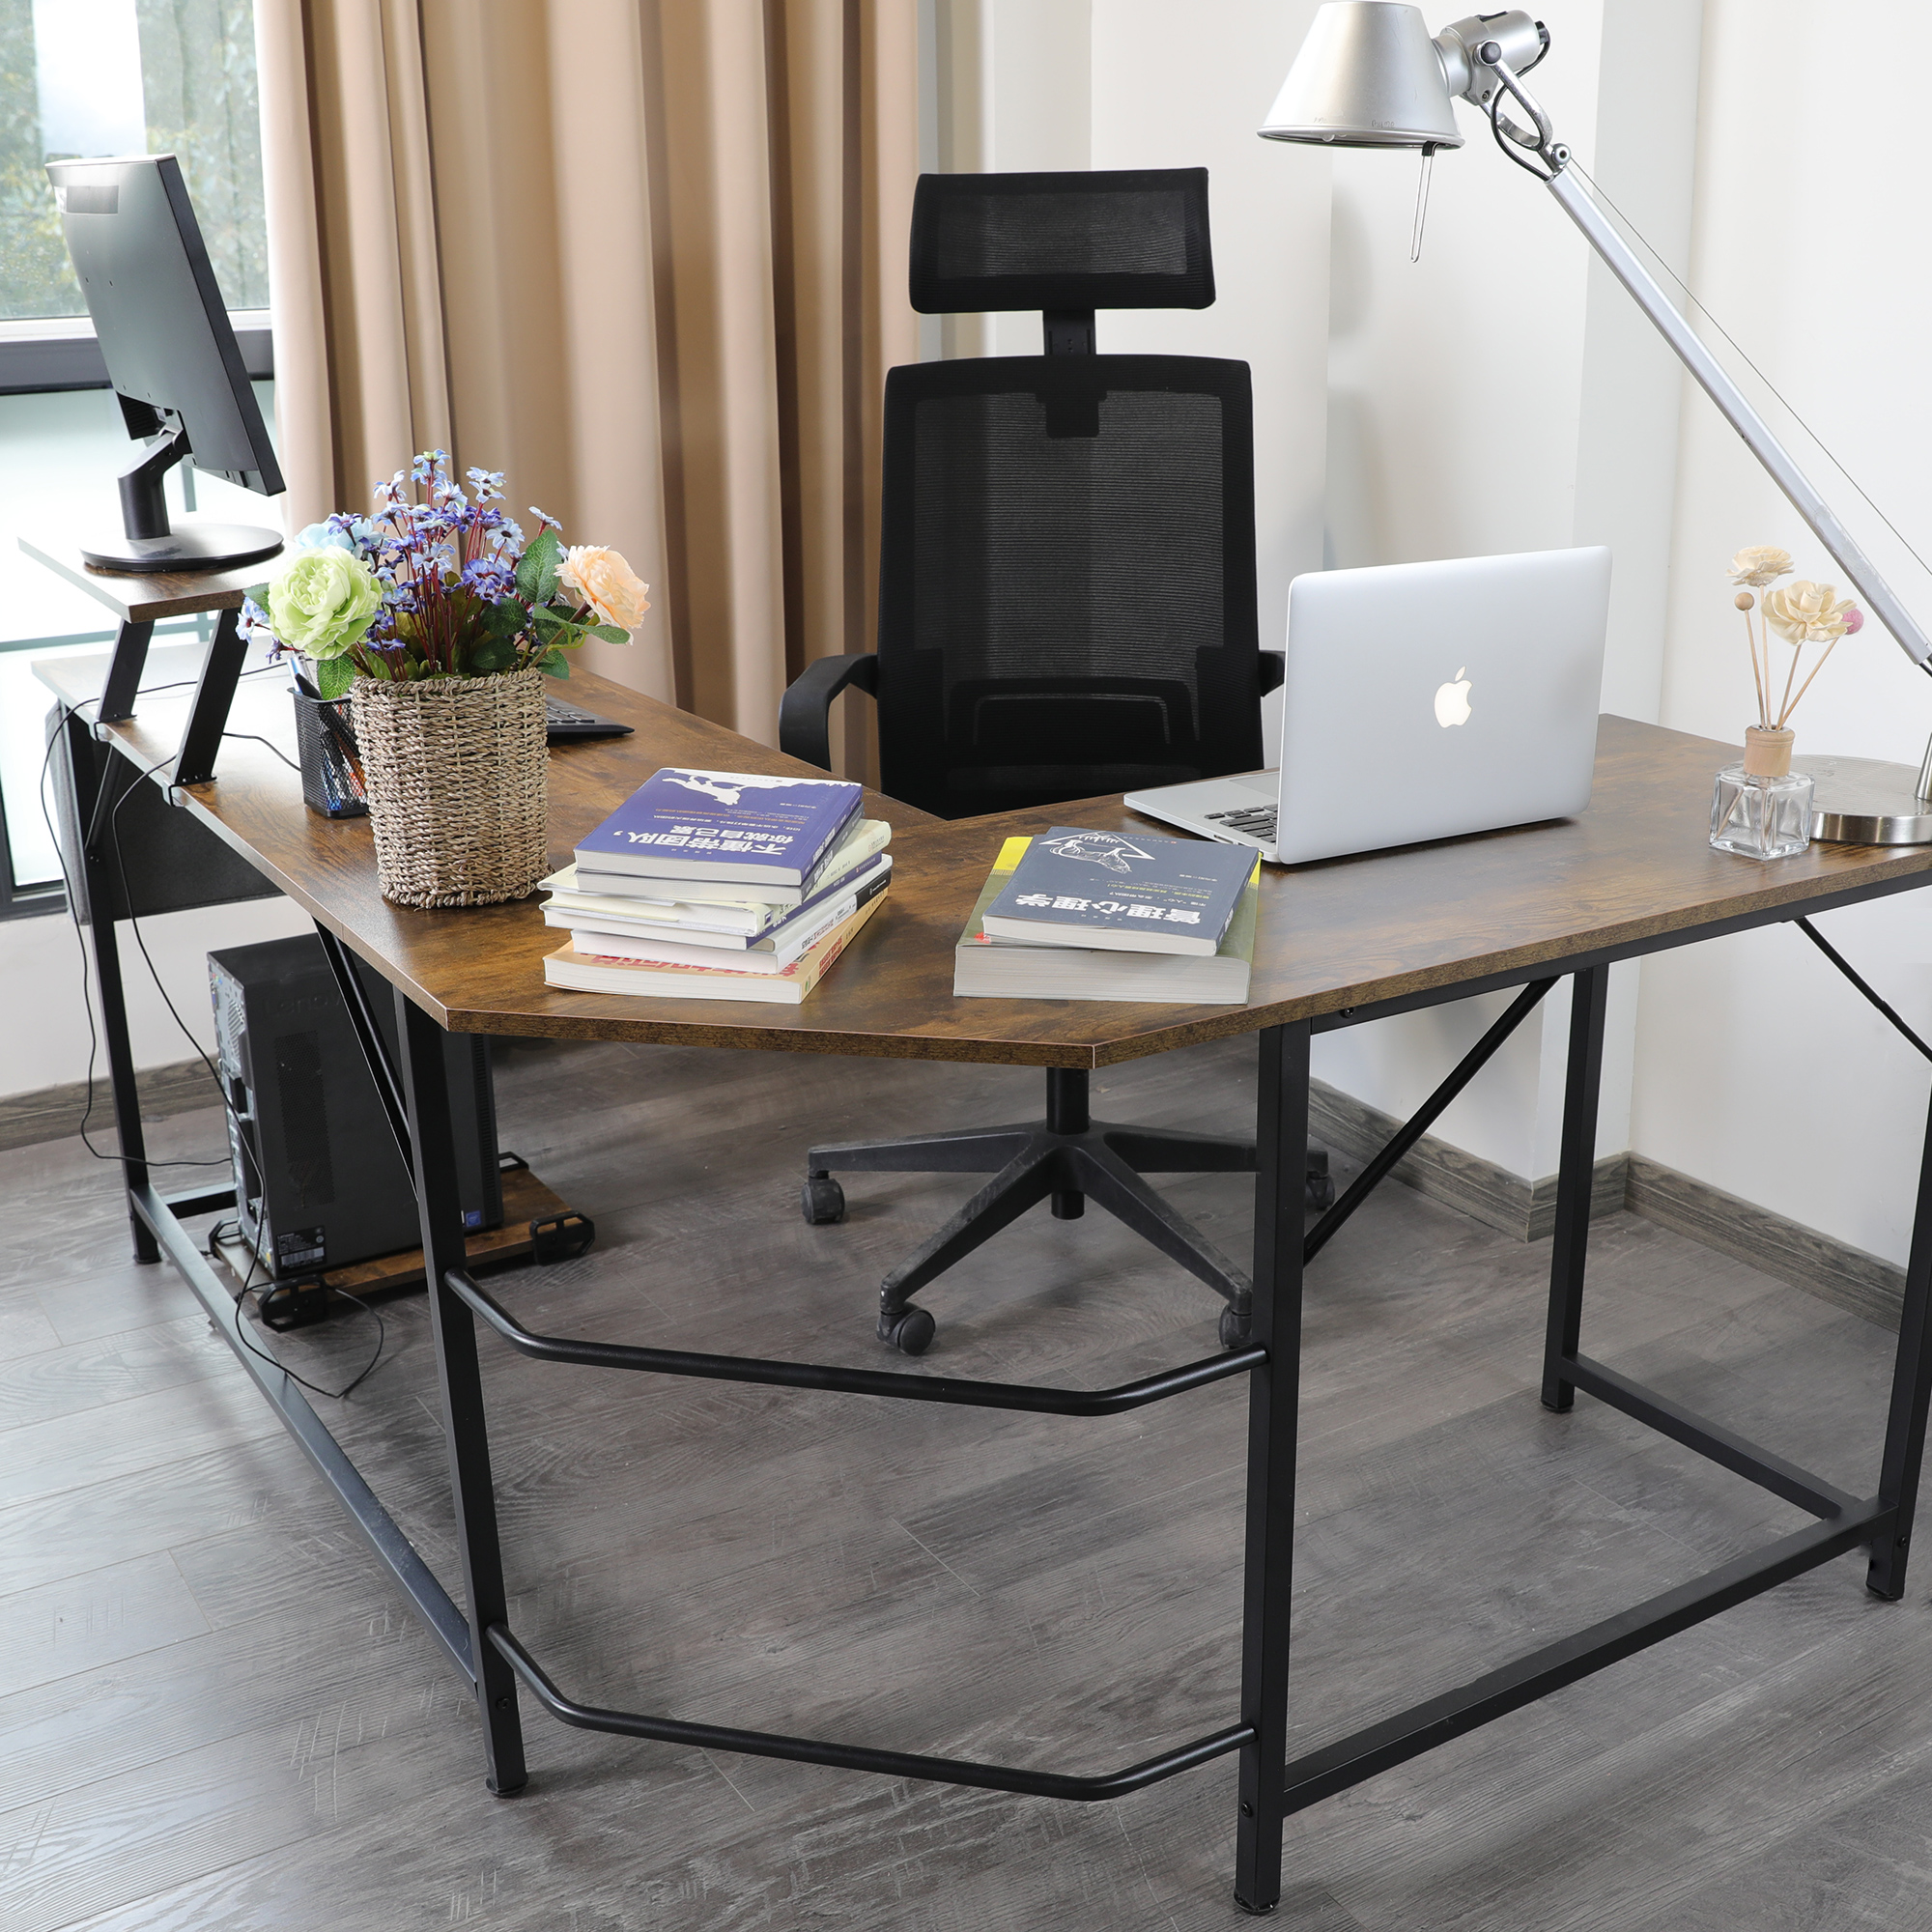 Details about    Home Office Desk Computer Desk Laptop Study Table Workstation W/Drawer 